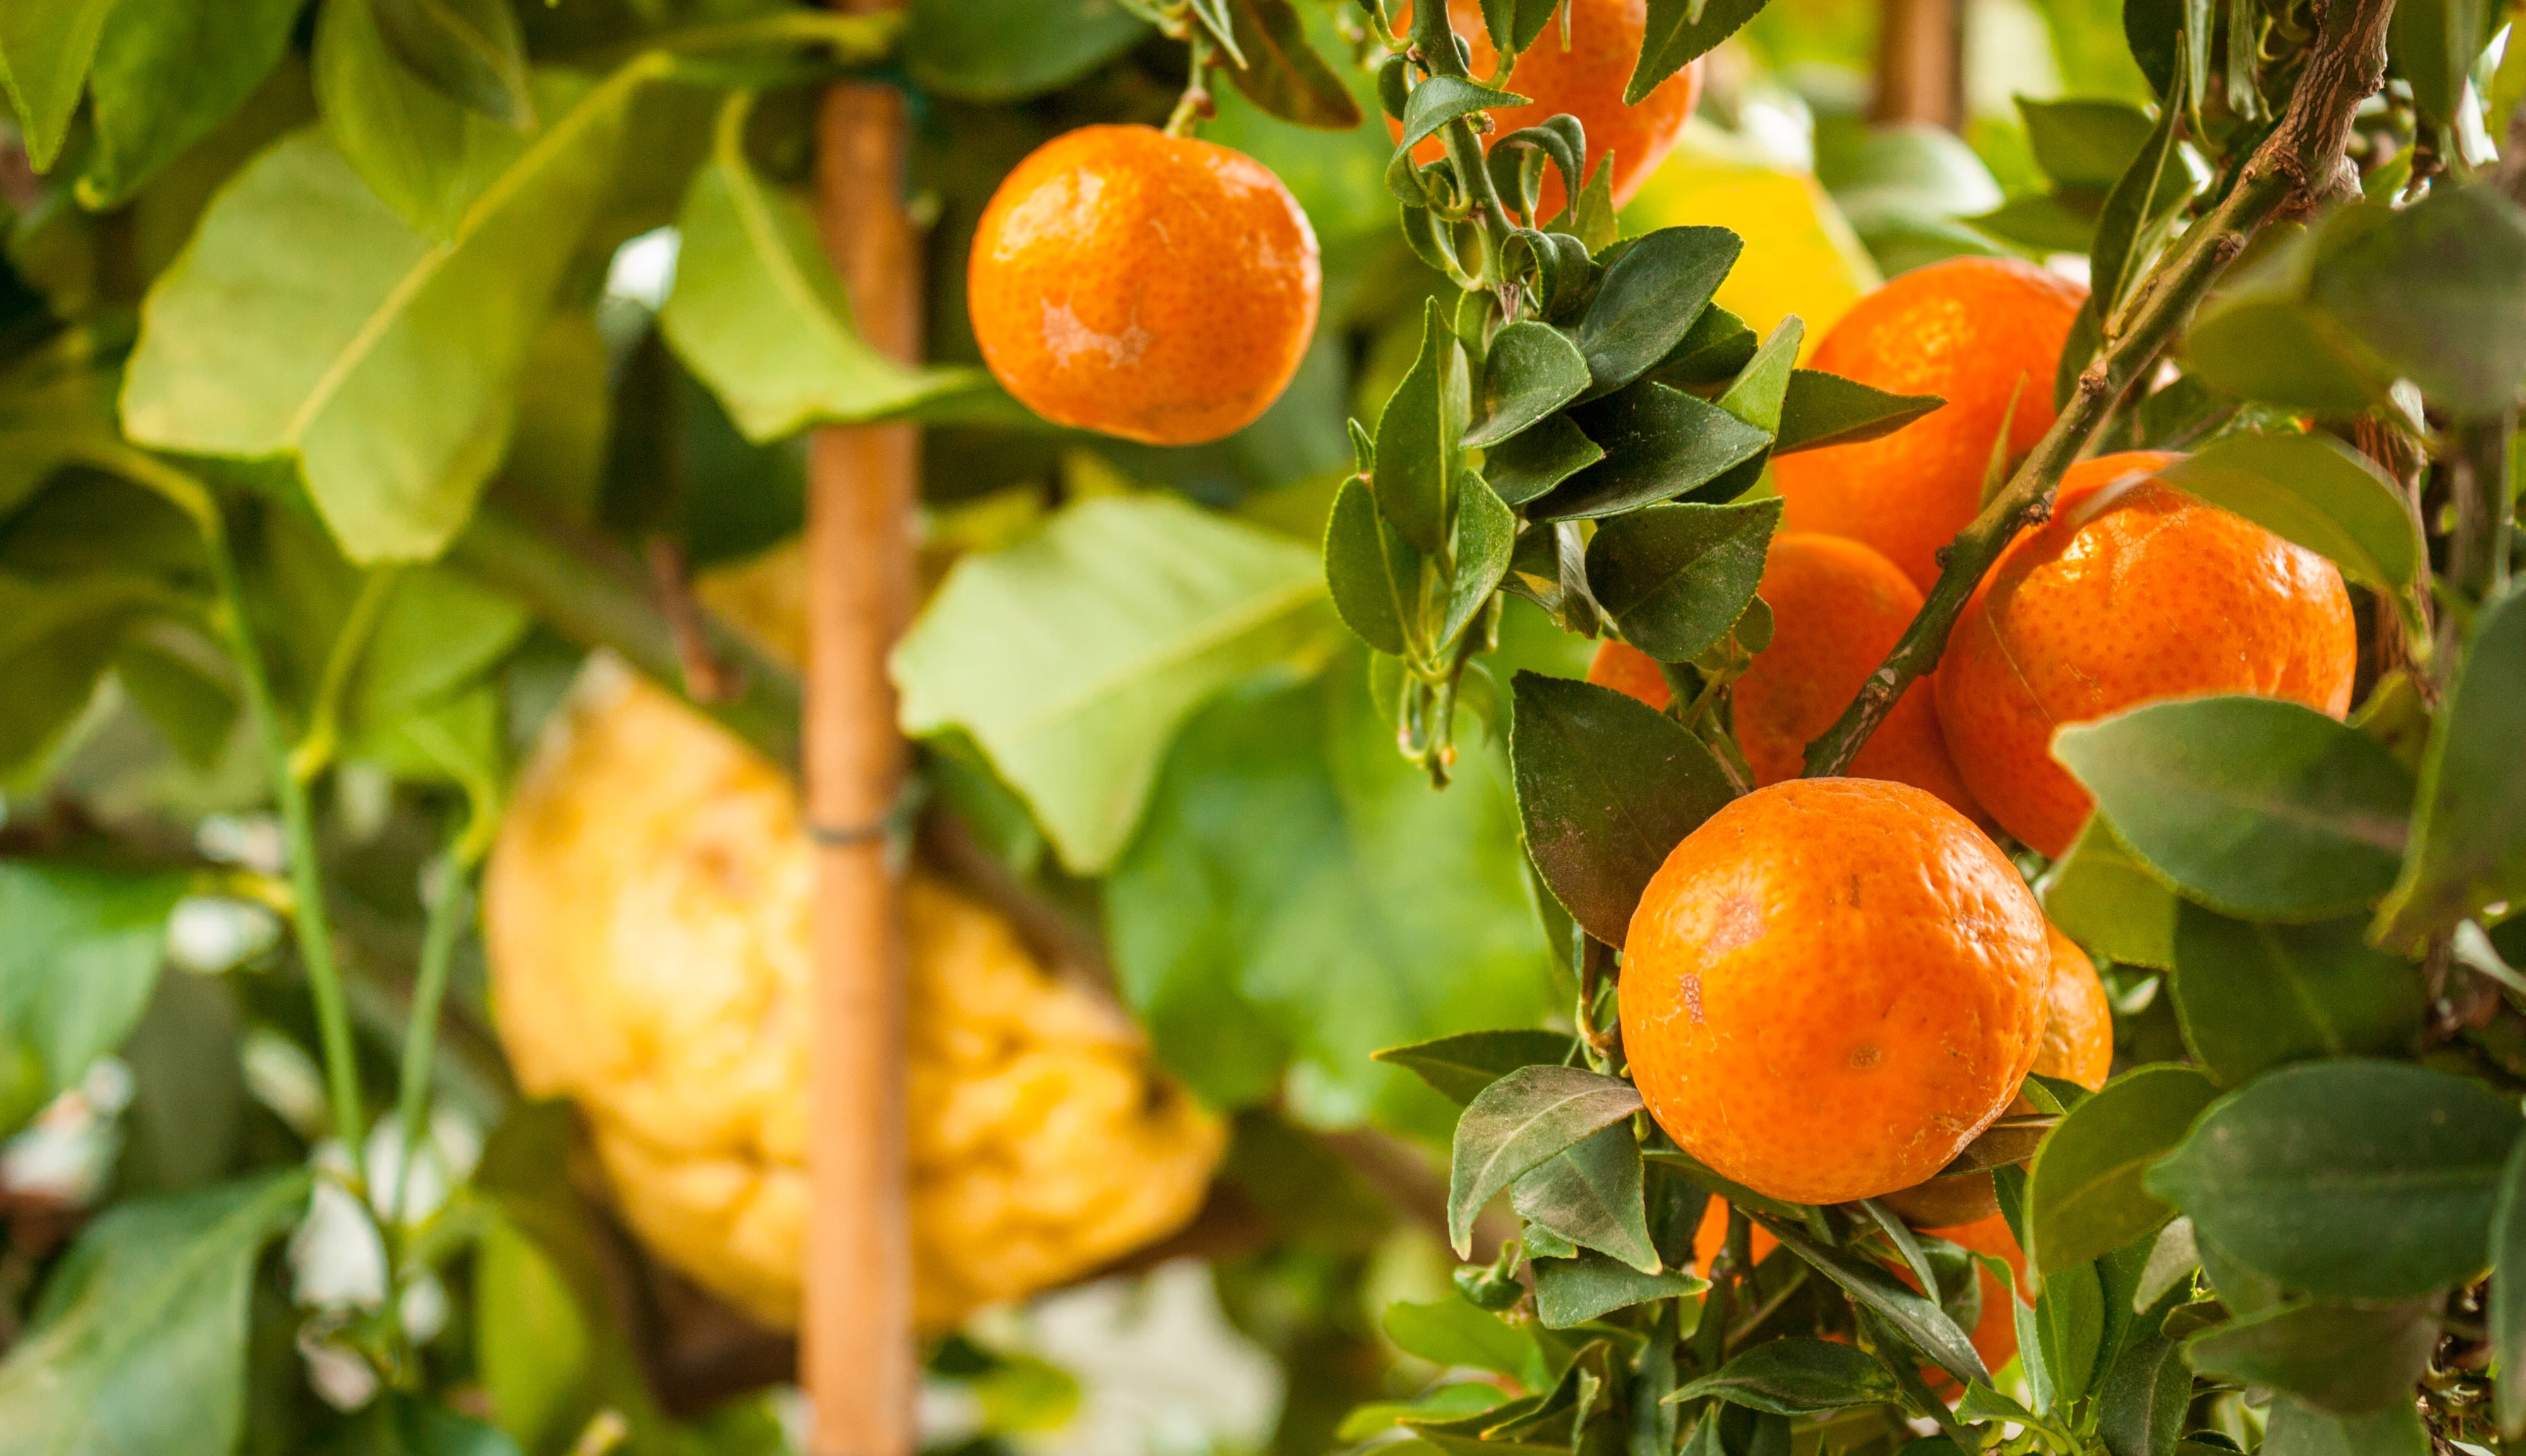 Handy-Wallpaper Lebensmittel, Mandarinen, Zitrusfrüchte, Zitrus, Garten, Obst, Blätter kostenlos herunterladen.